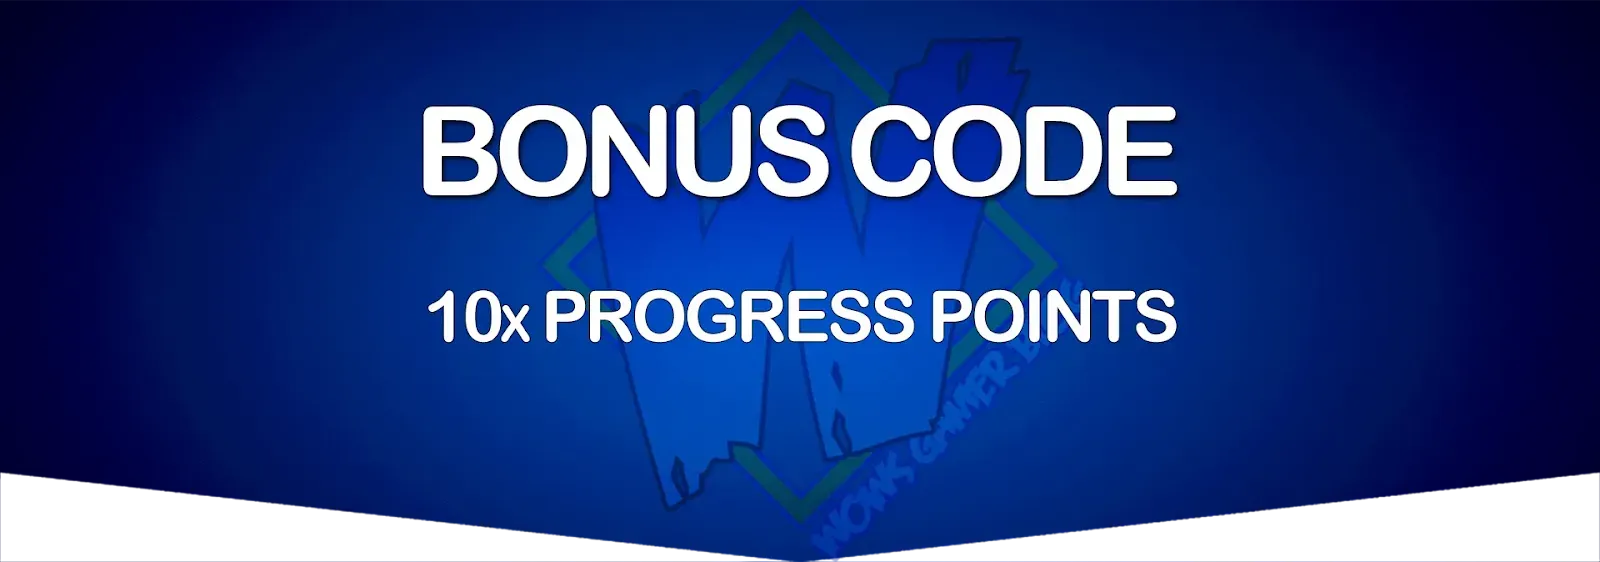 image of bonus code header